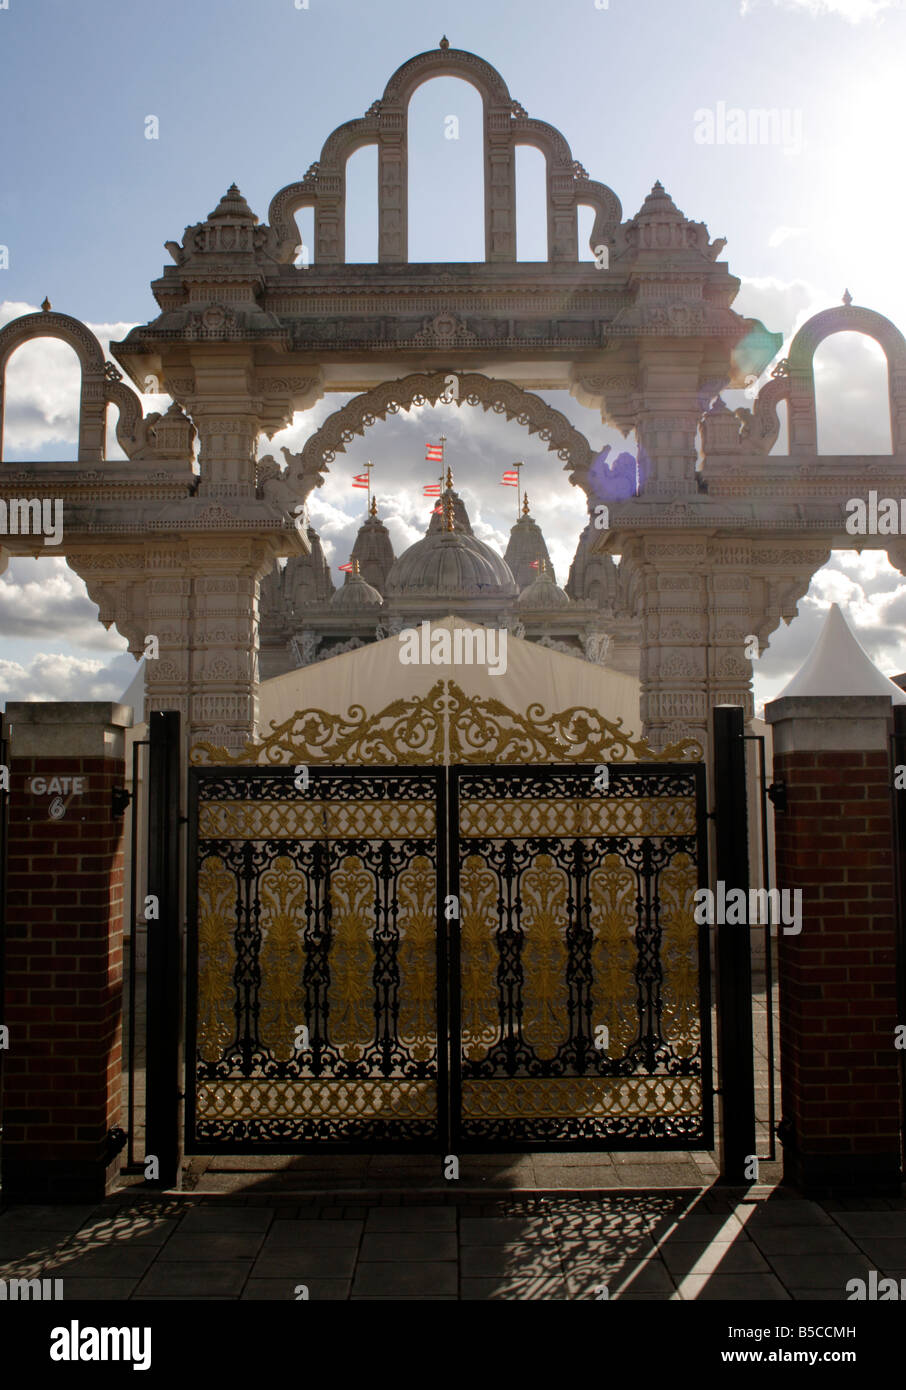 Entrance Gate Shree Swaminarayan Mandir Hindu Temple Neasden London Stock Photo